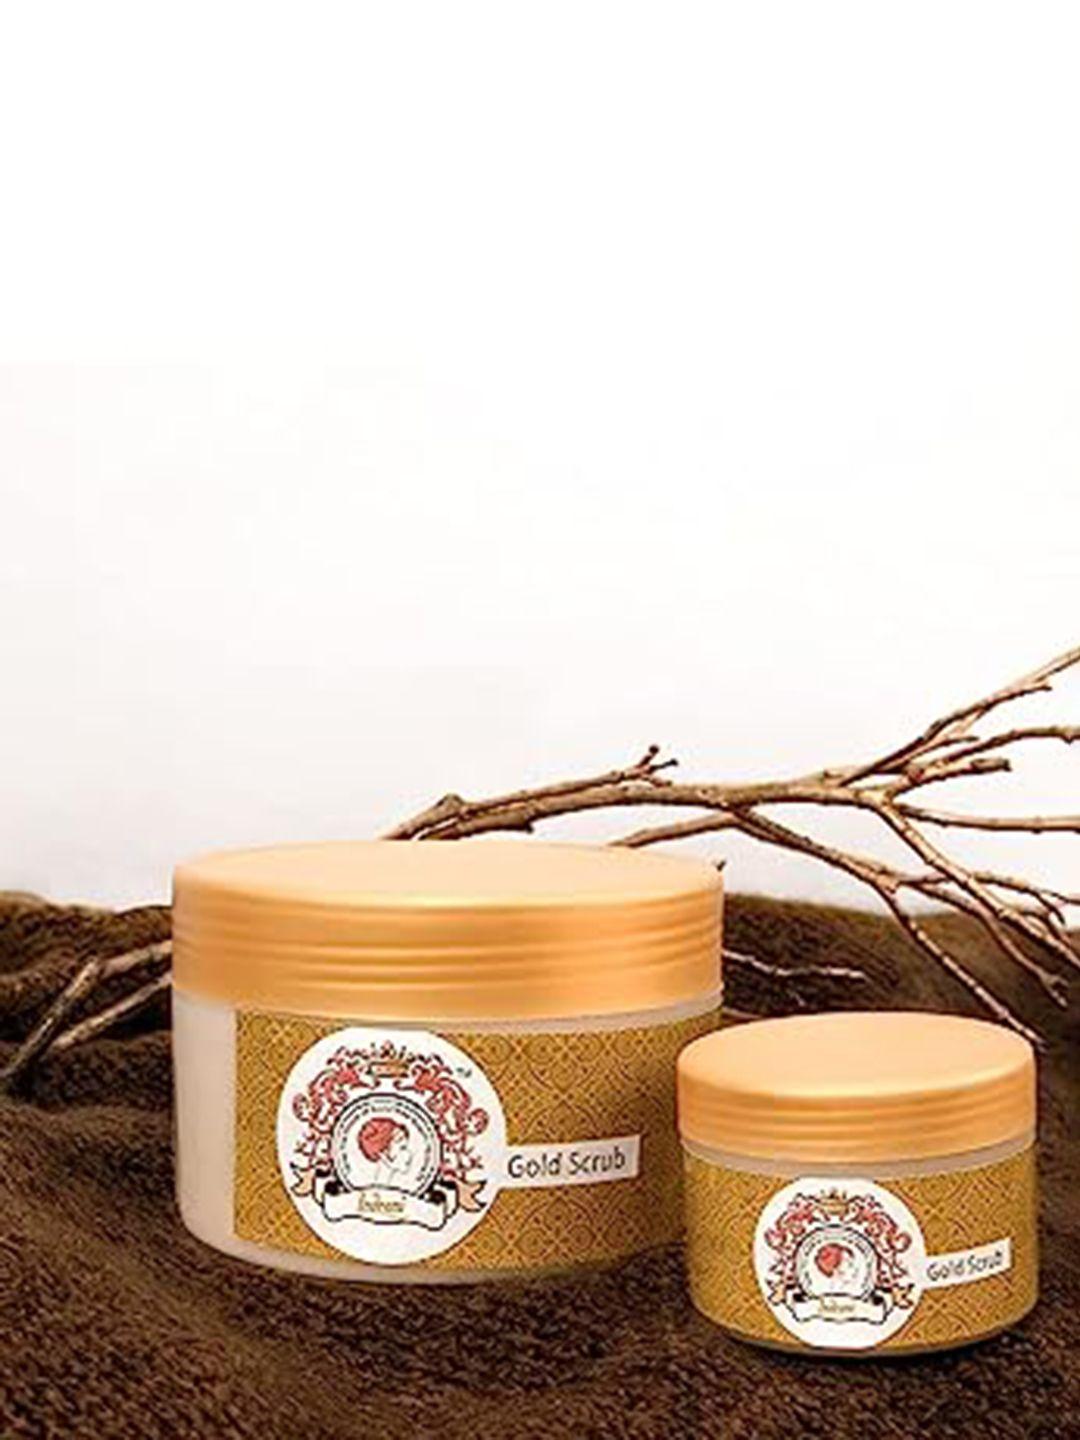 indrani cosmetics natural glow gold scrub with walnut shell powder & gold dust - 50 g